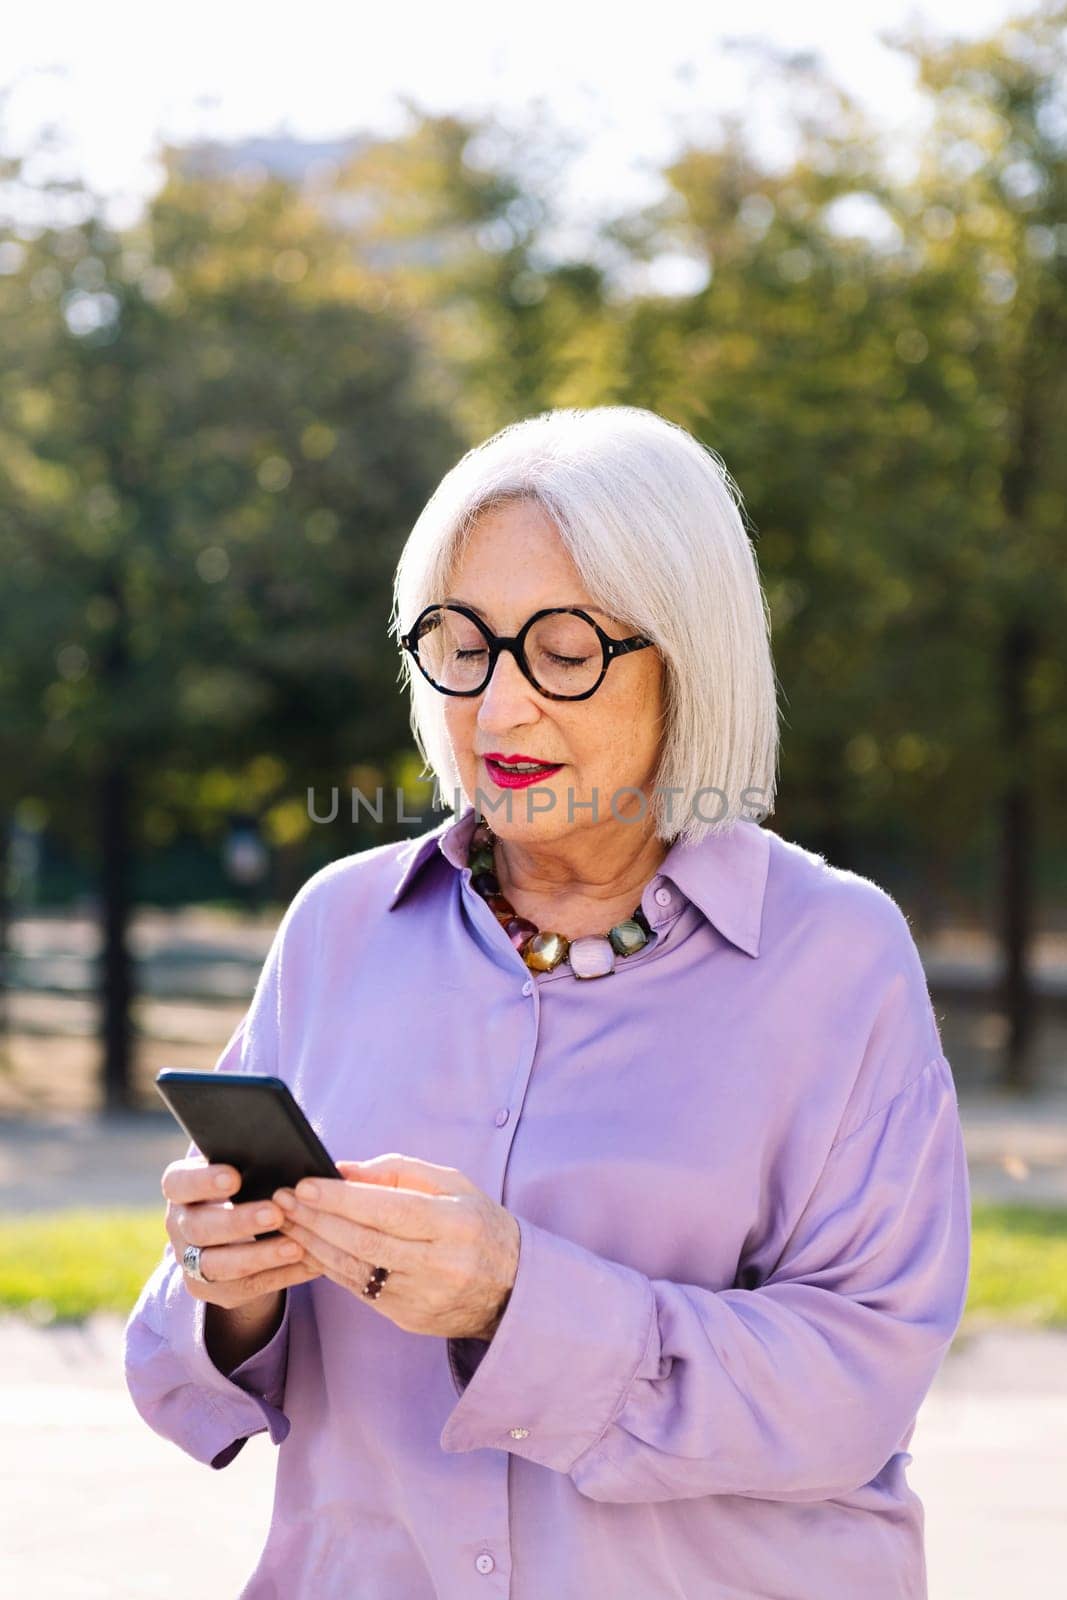 senior woman using mobile phone outdoors by raulmelldo